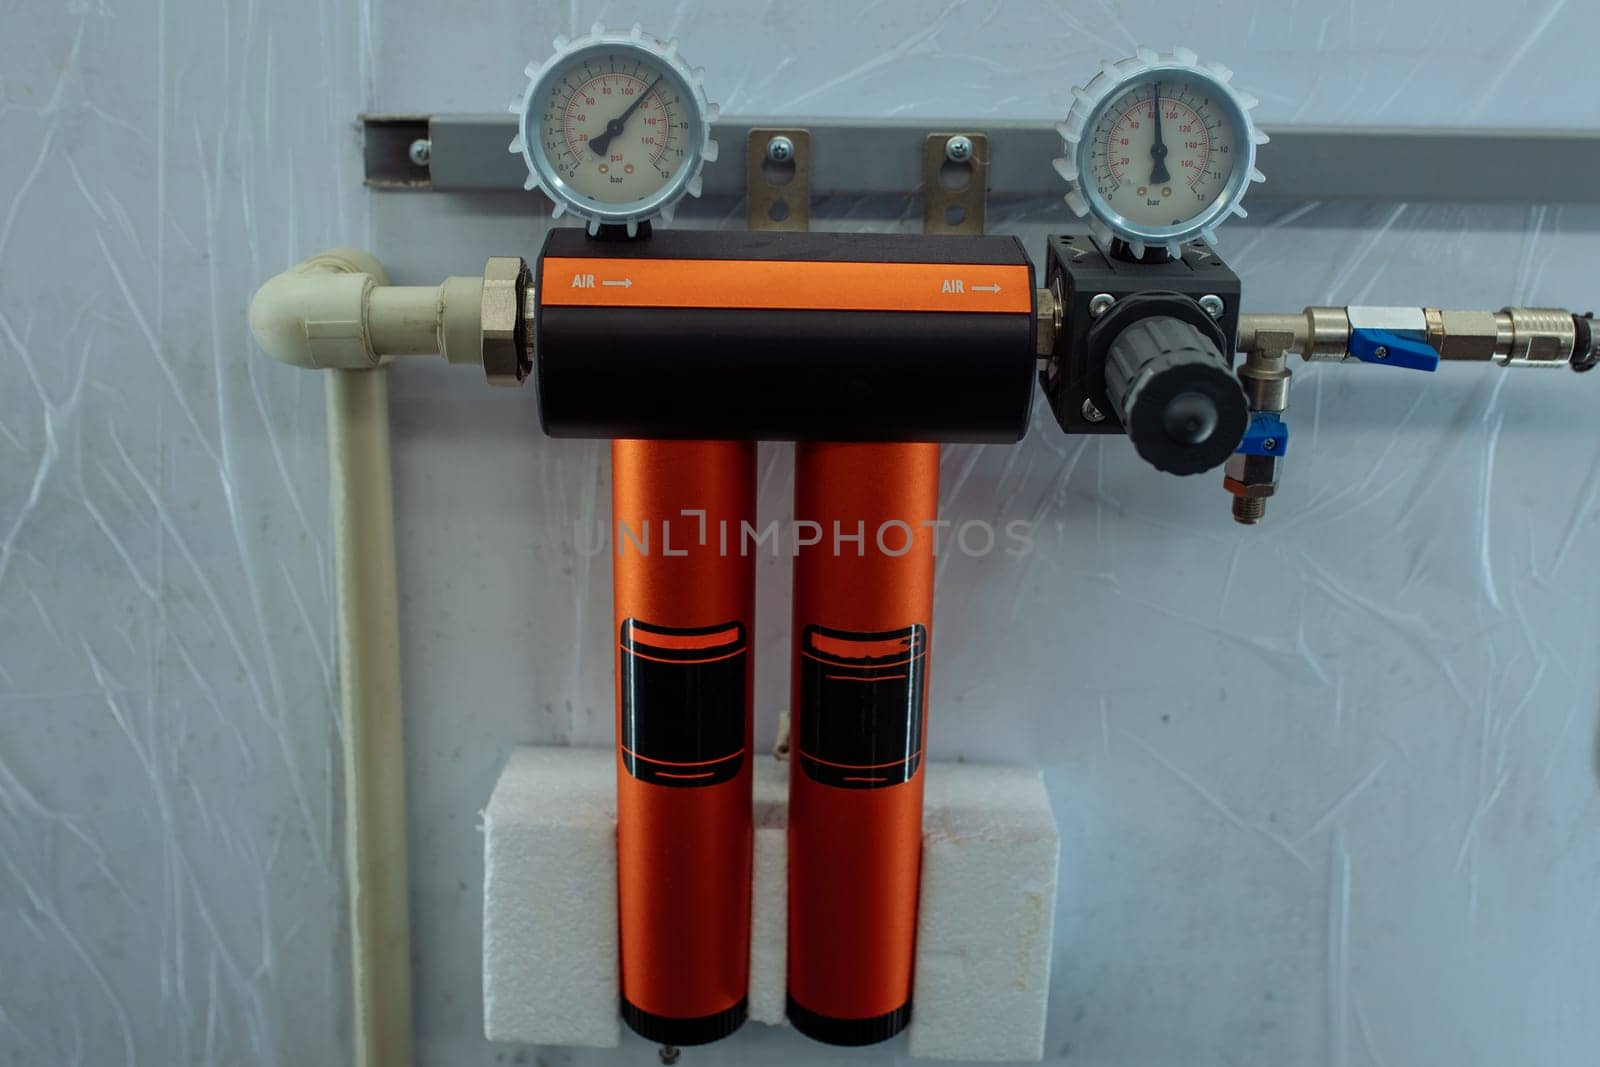 Air compressor water trap filter, pressure gauge